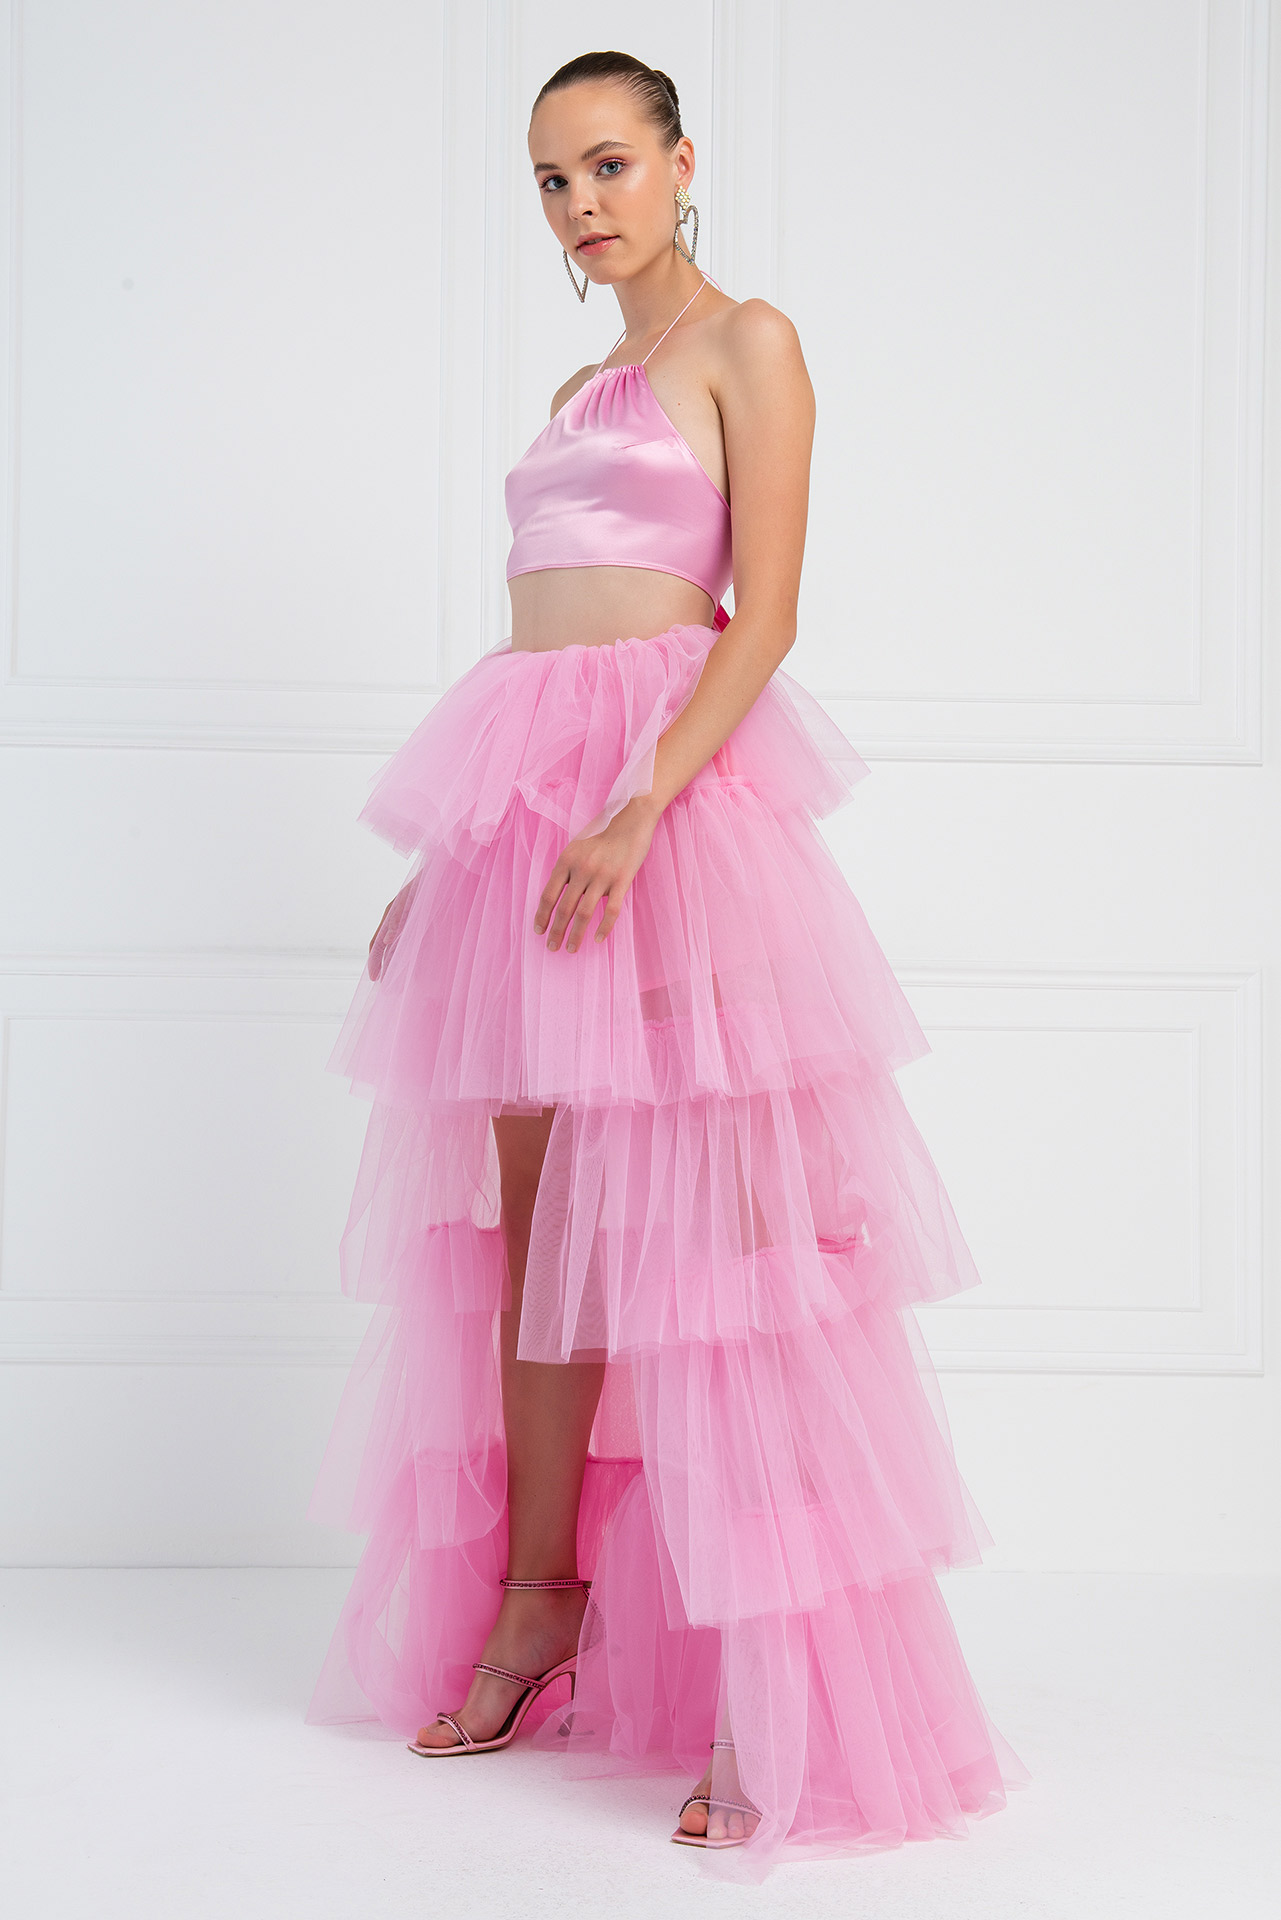 Wholesale New Pink Mini Tulle Skirt